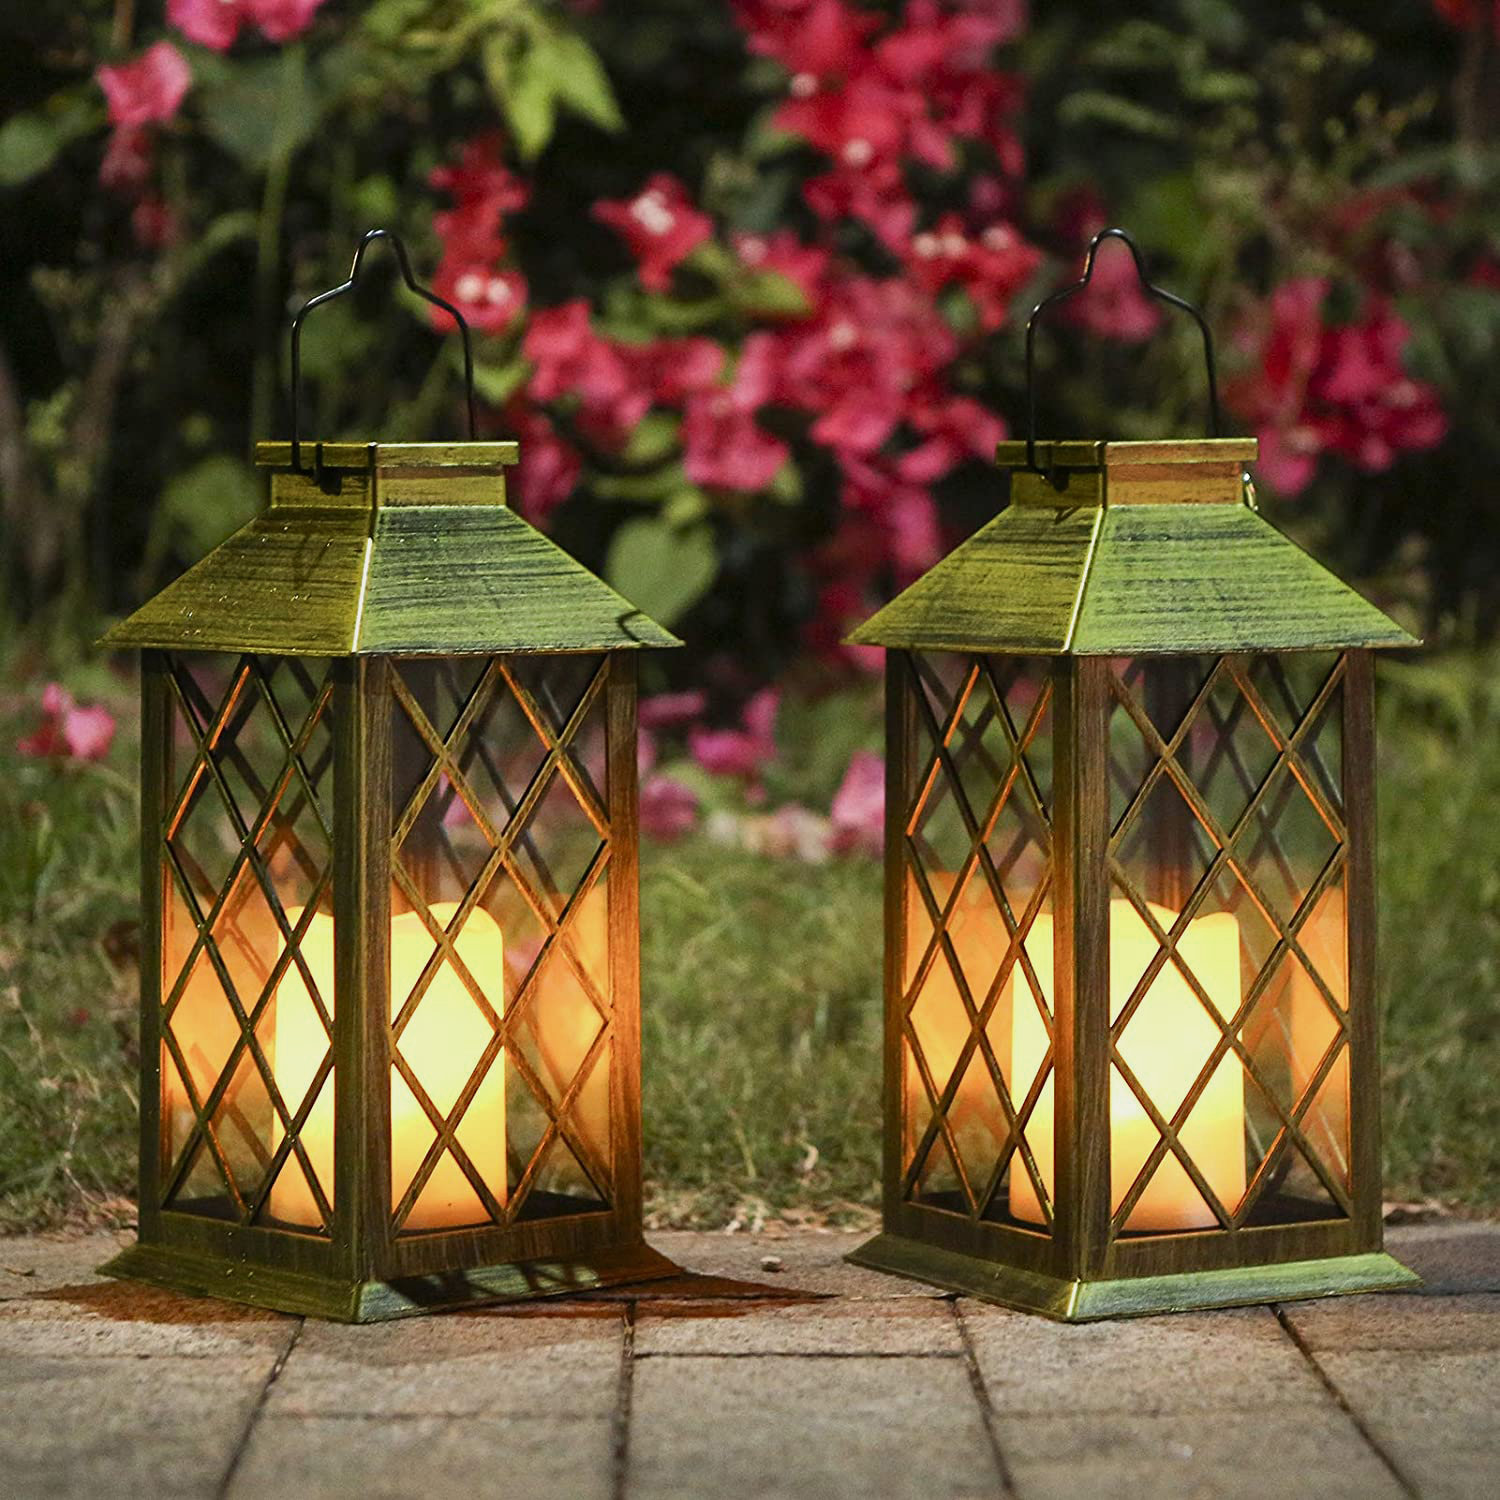 Details about   Solar Powered LED Lantern Light Outdoor Garden Landscape Lamp Hanging K4P1 